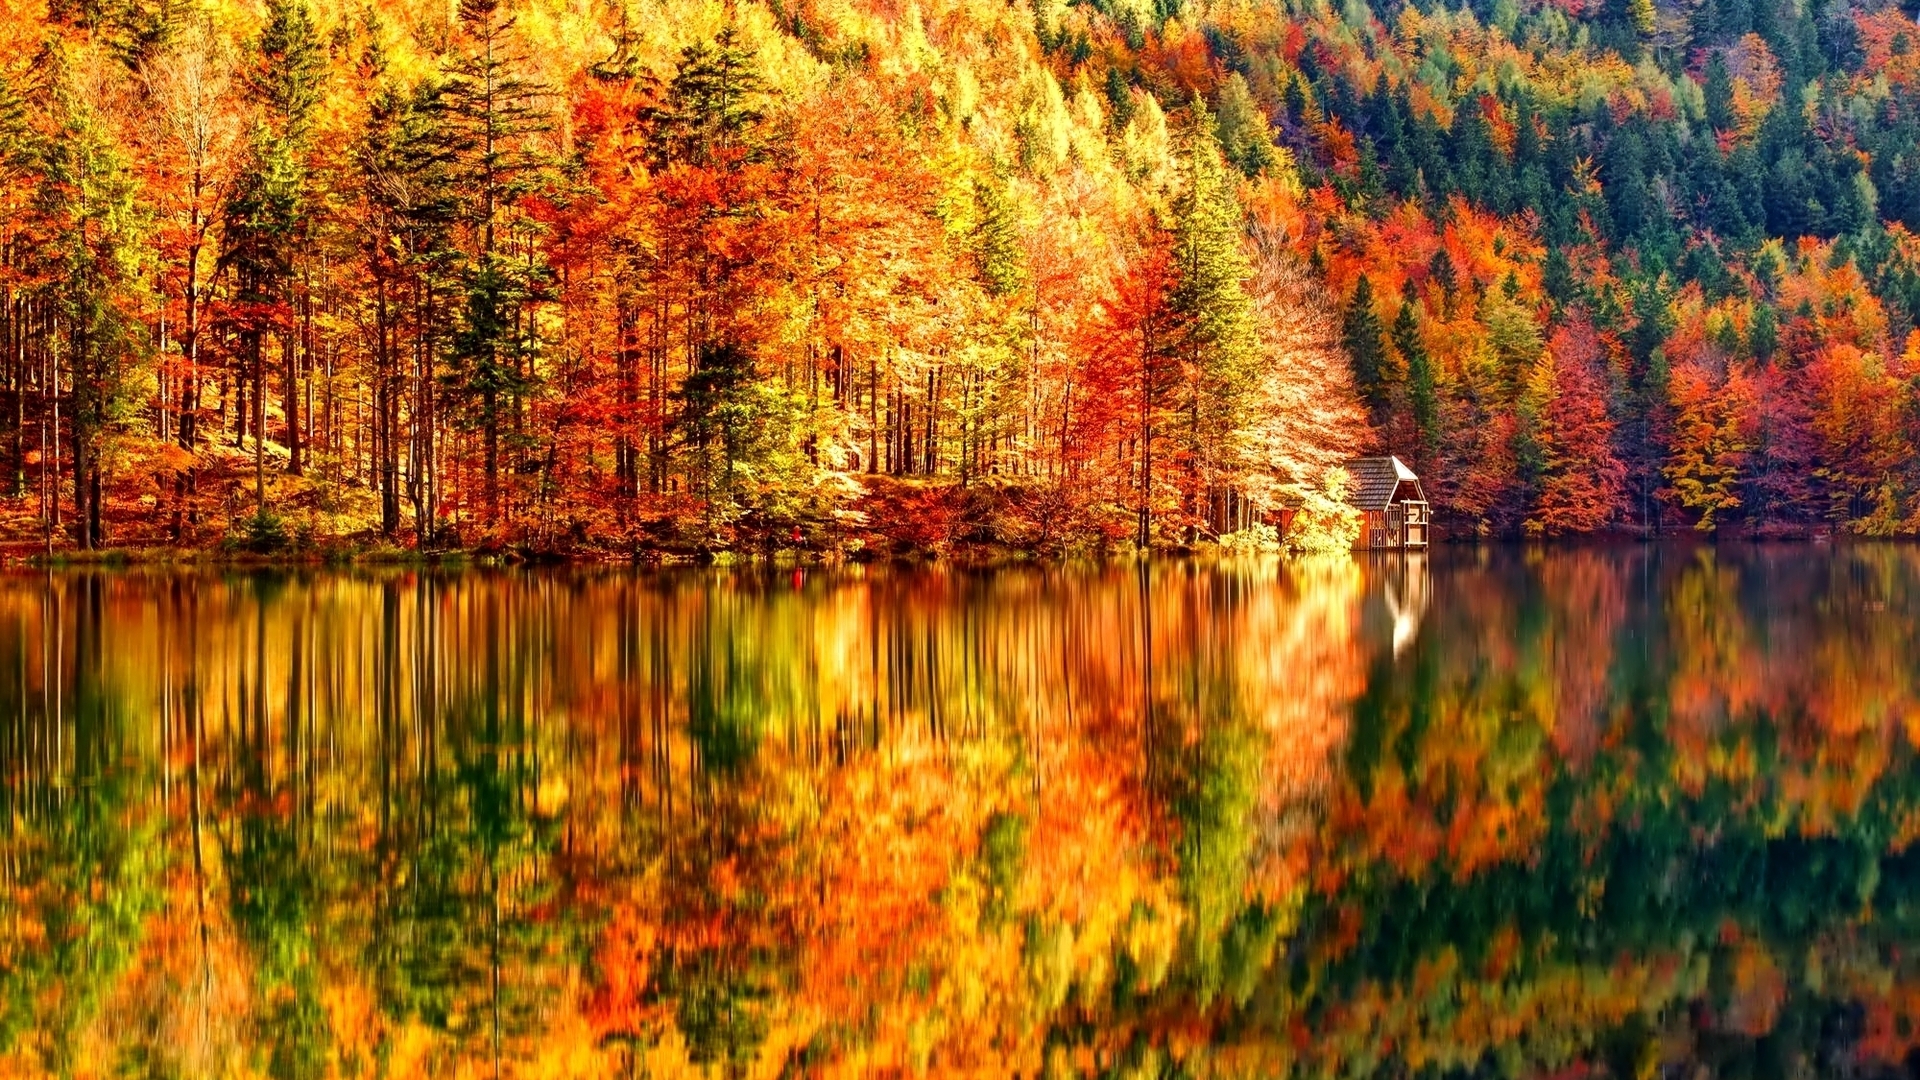 Autumn Landscape for 1920 x 1080 HDTV 1080p resolution